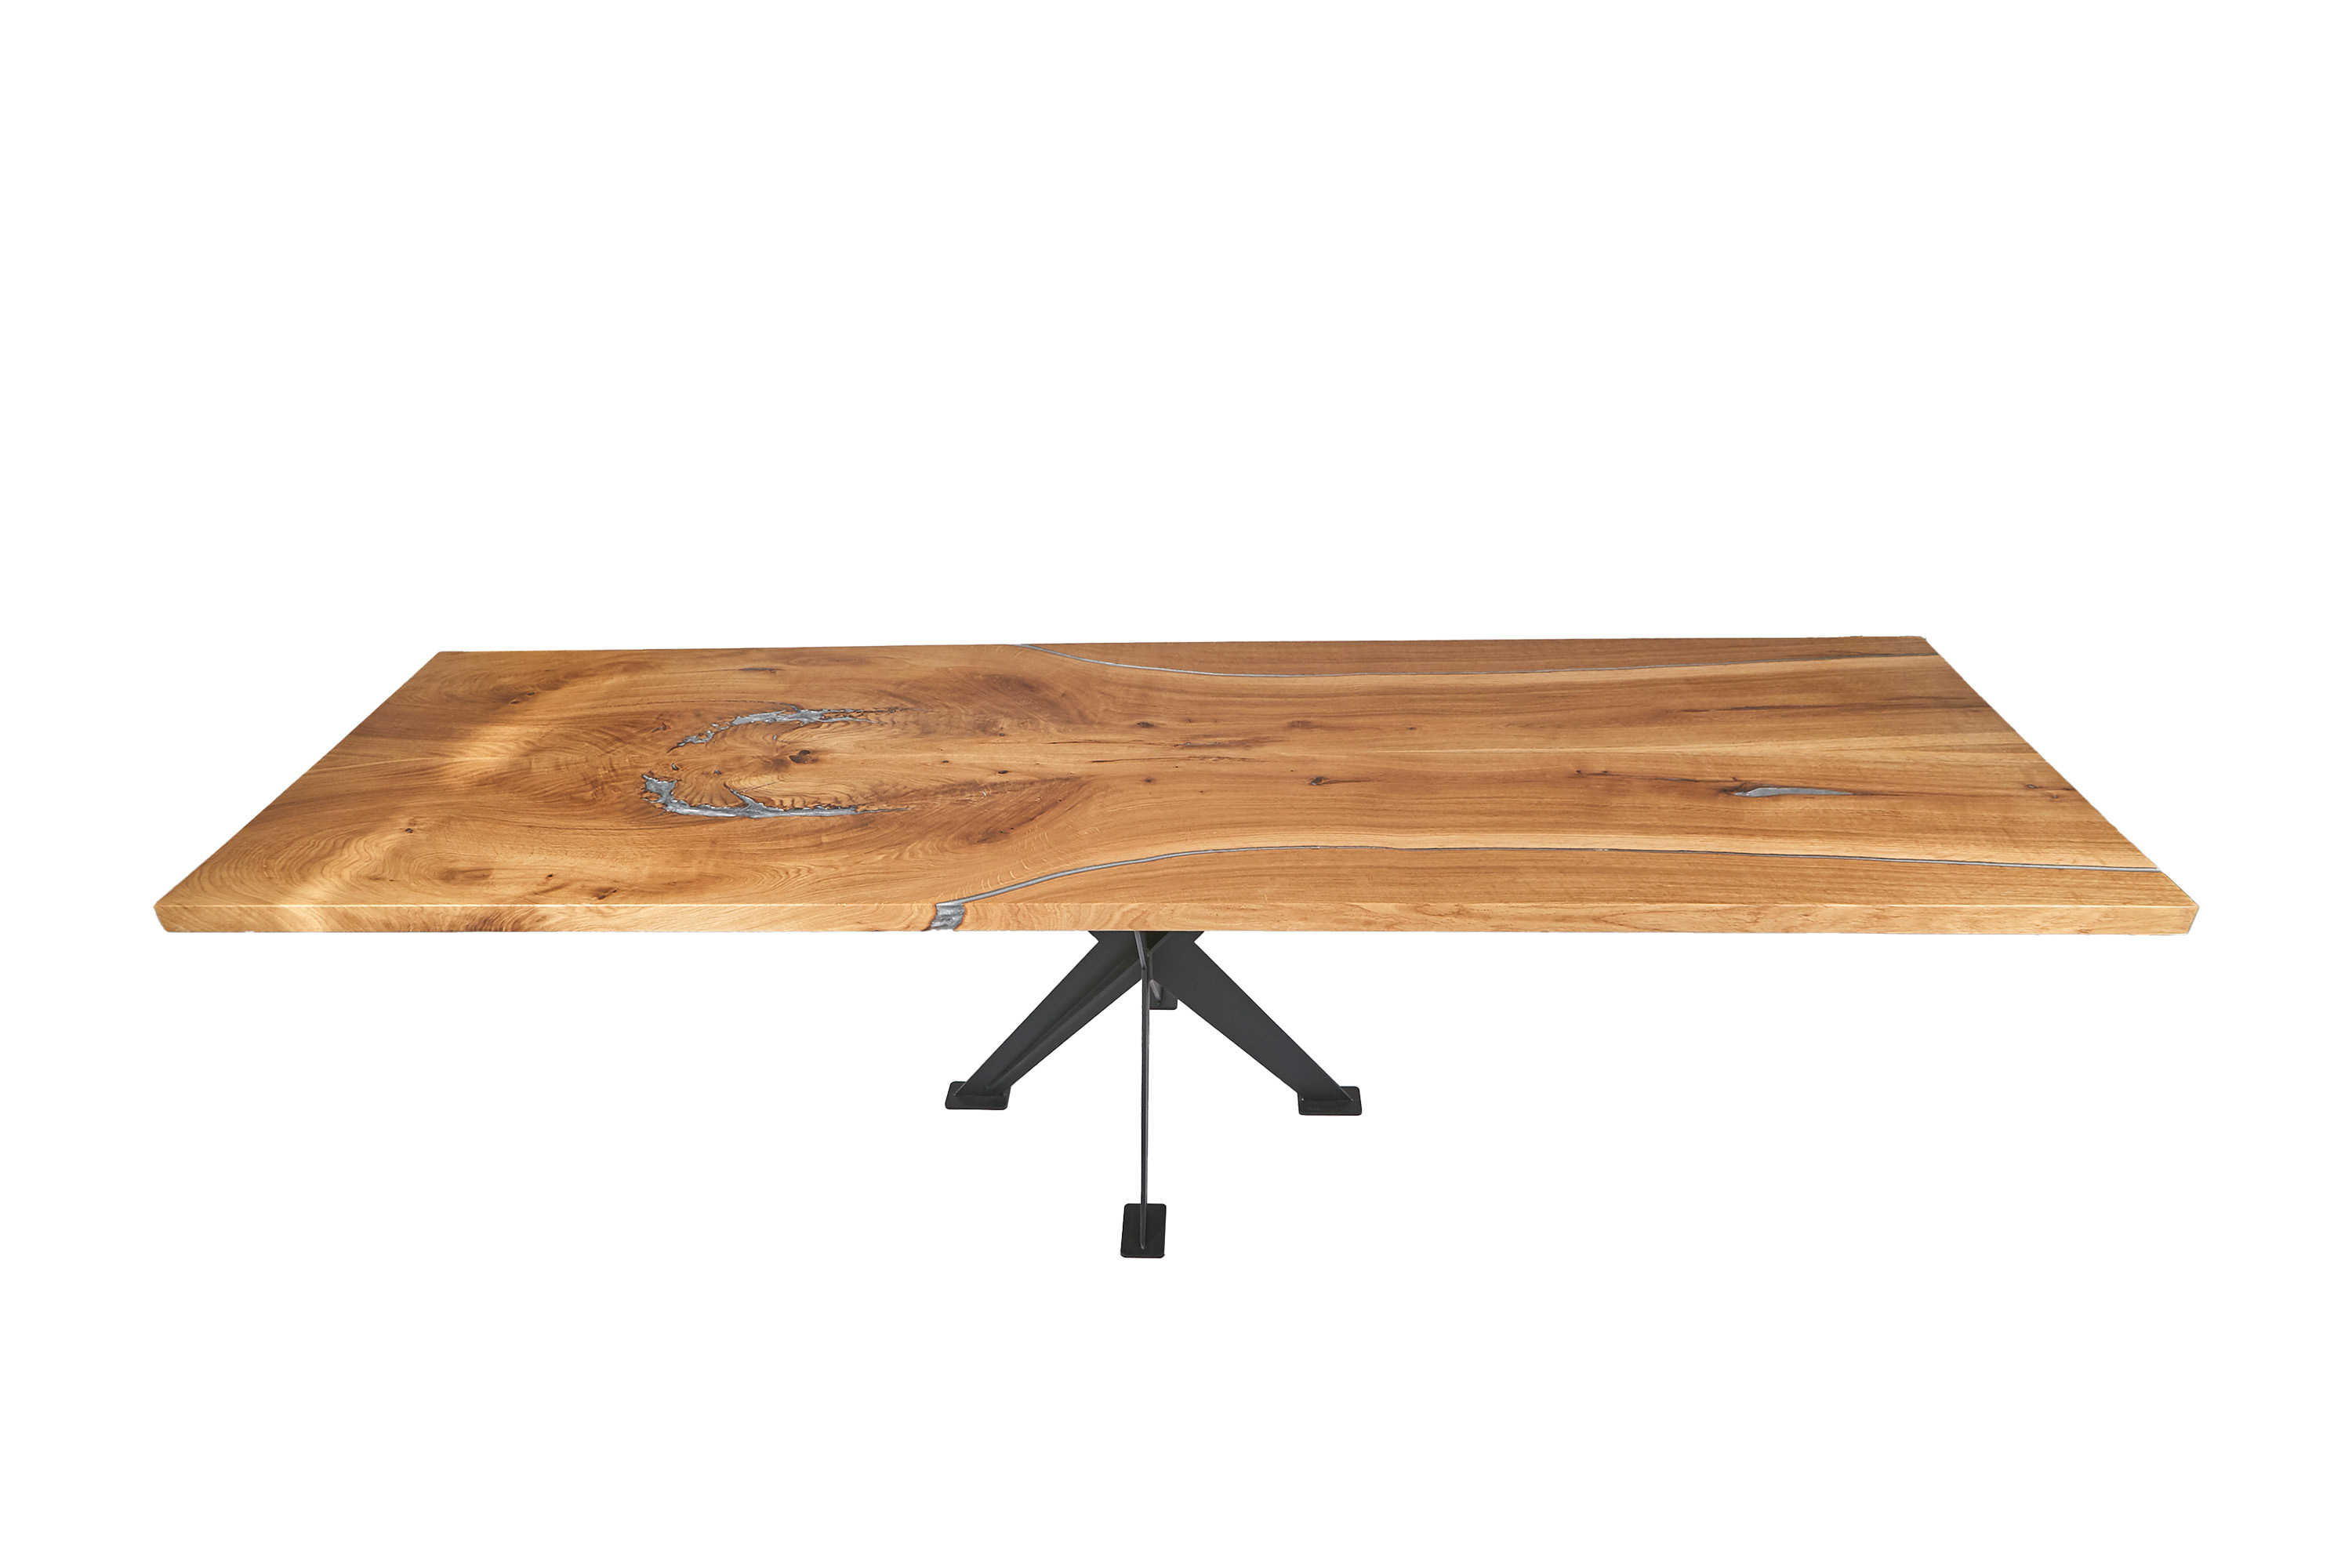 Oak table top as an eye-catcher